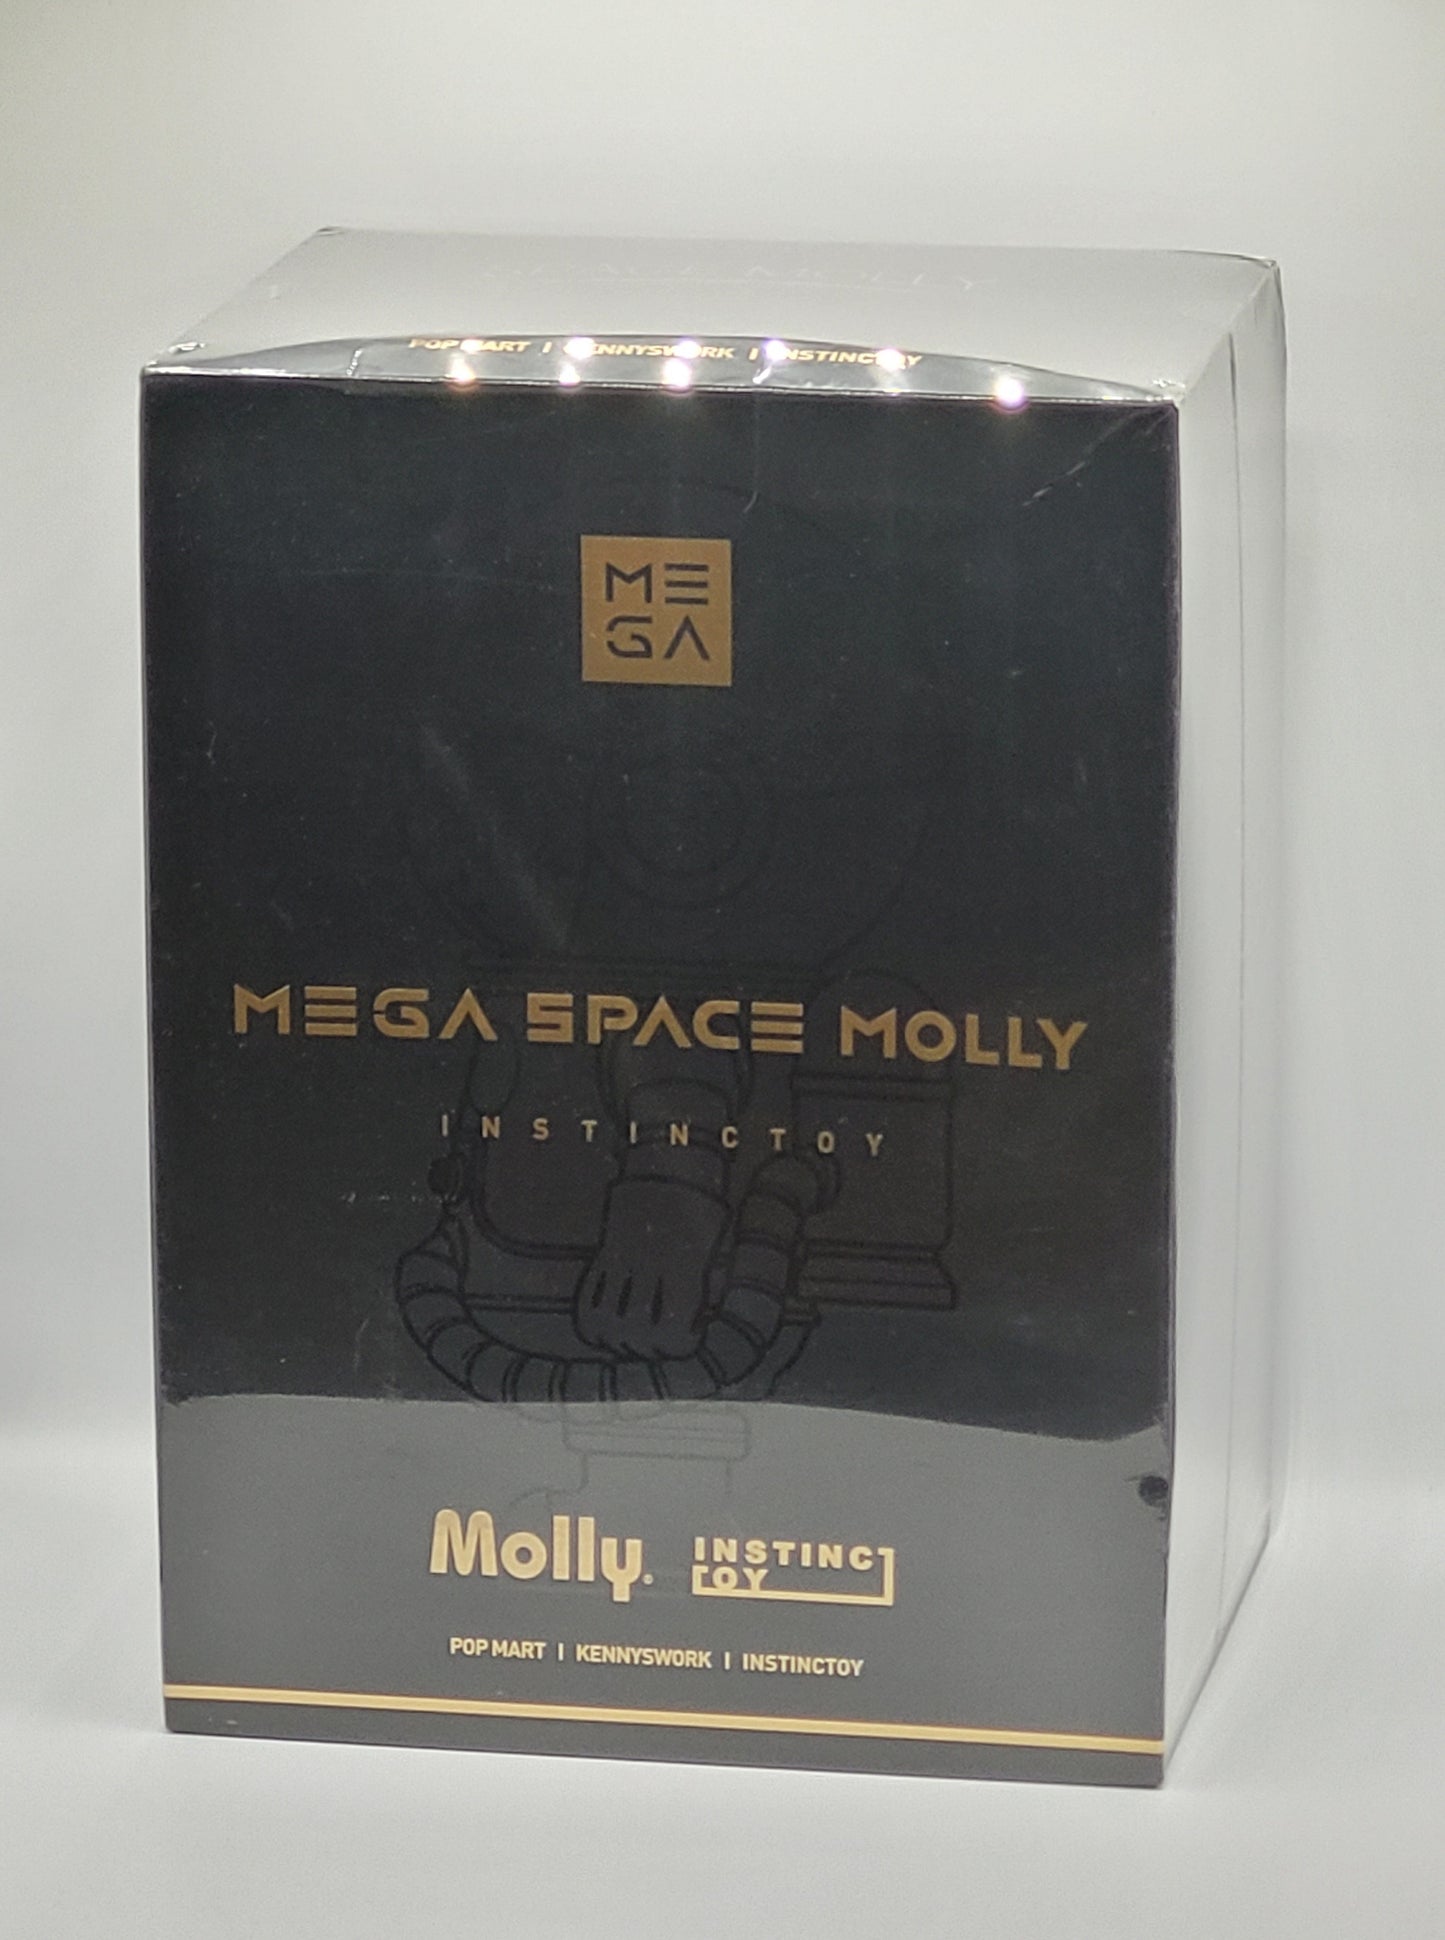 POPMART KENNYSWORK MEGA COLLECTION 400% SPACE Molly INSTINCTOY (Sealed New)